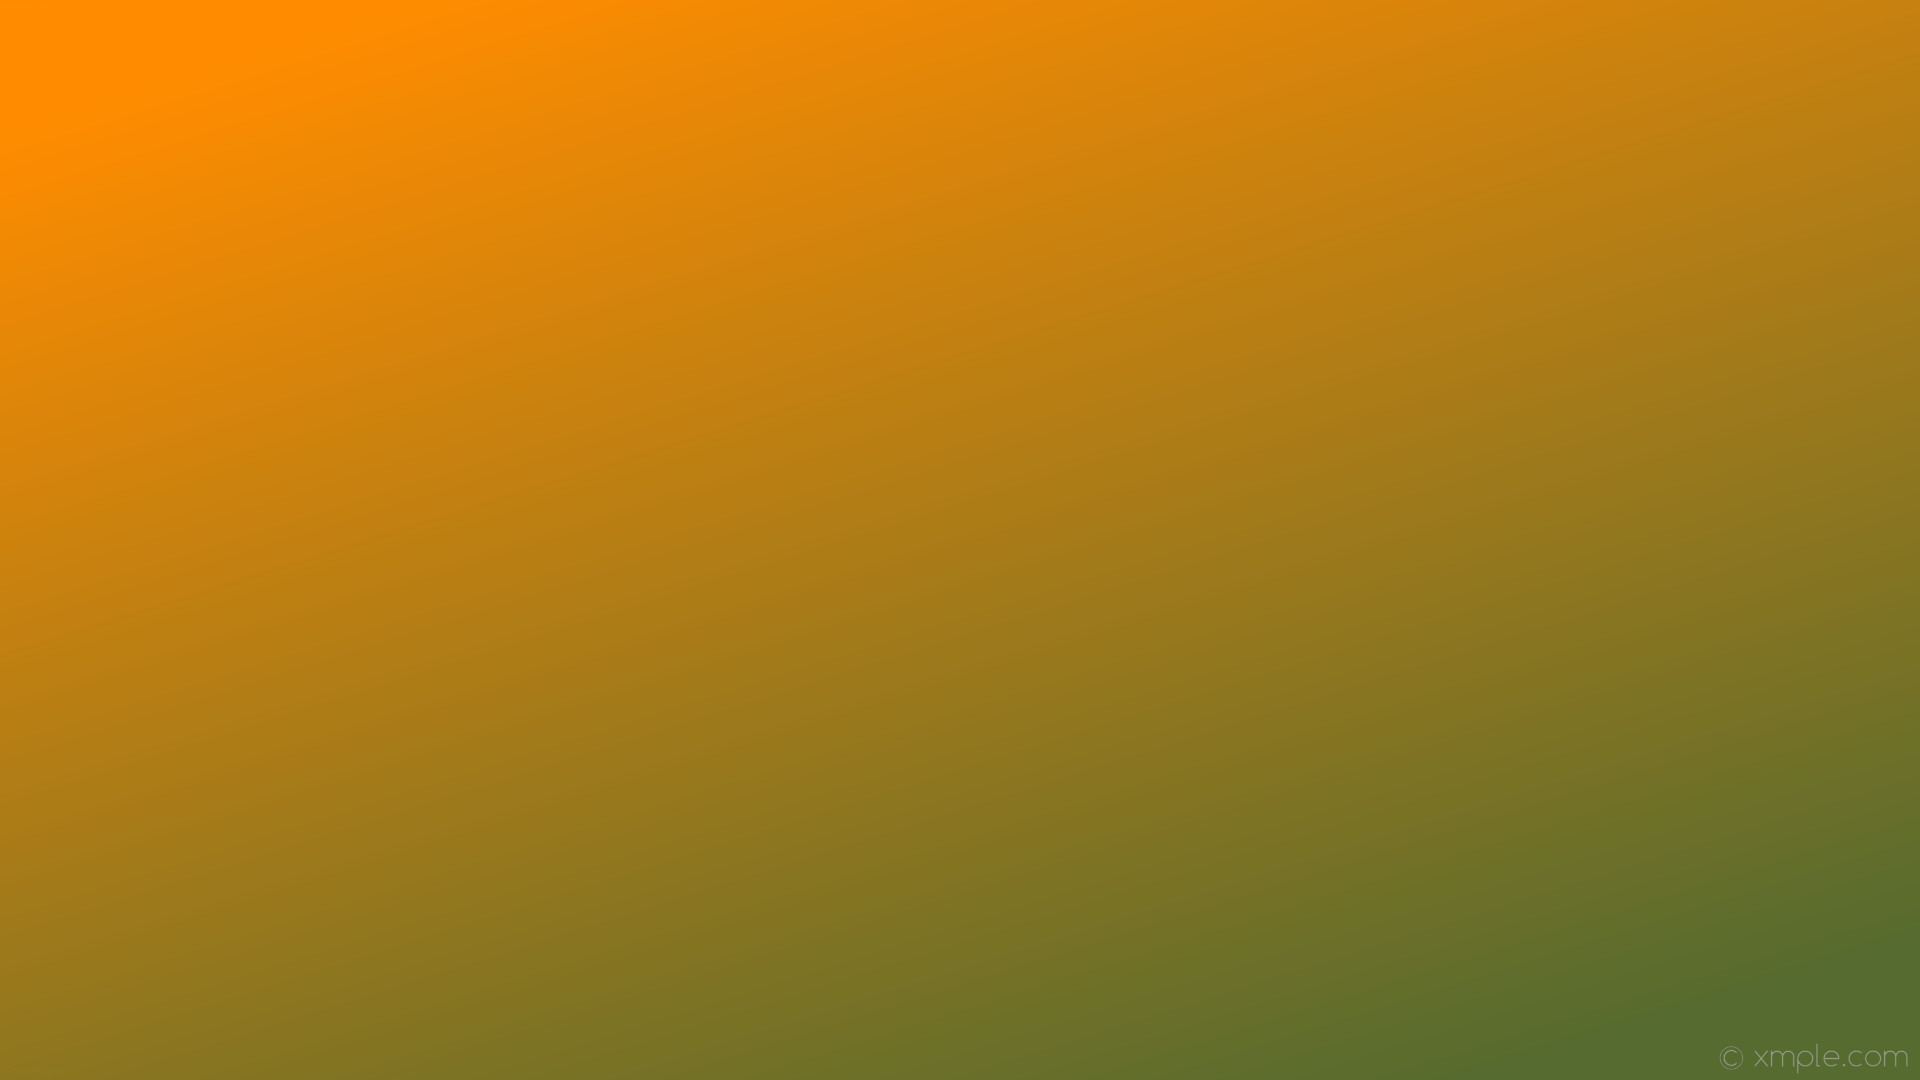 1920x1080 wallpaper linear orange gradient green dark orange dark olive green #ff8c00  #556b2f 135Â°